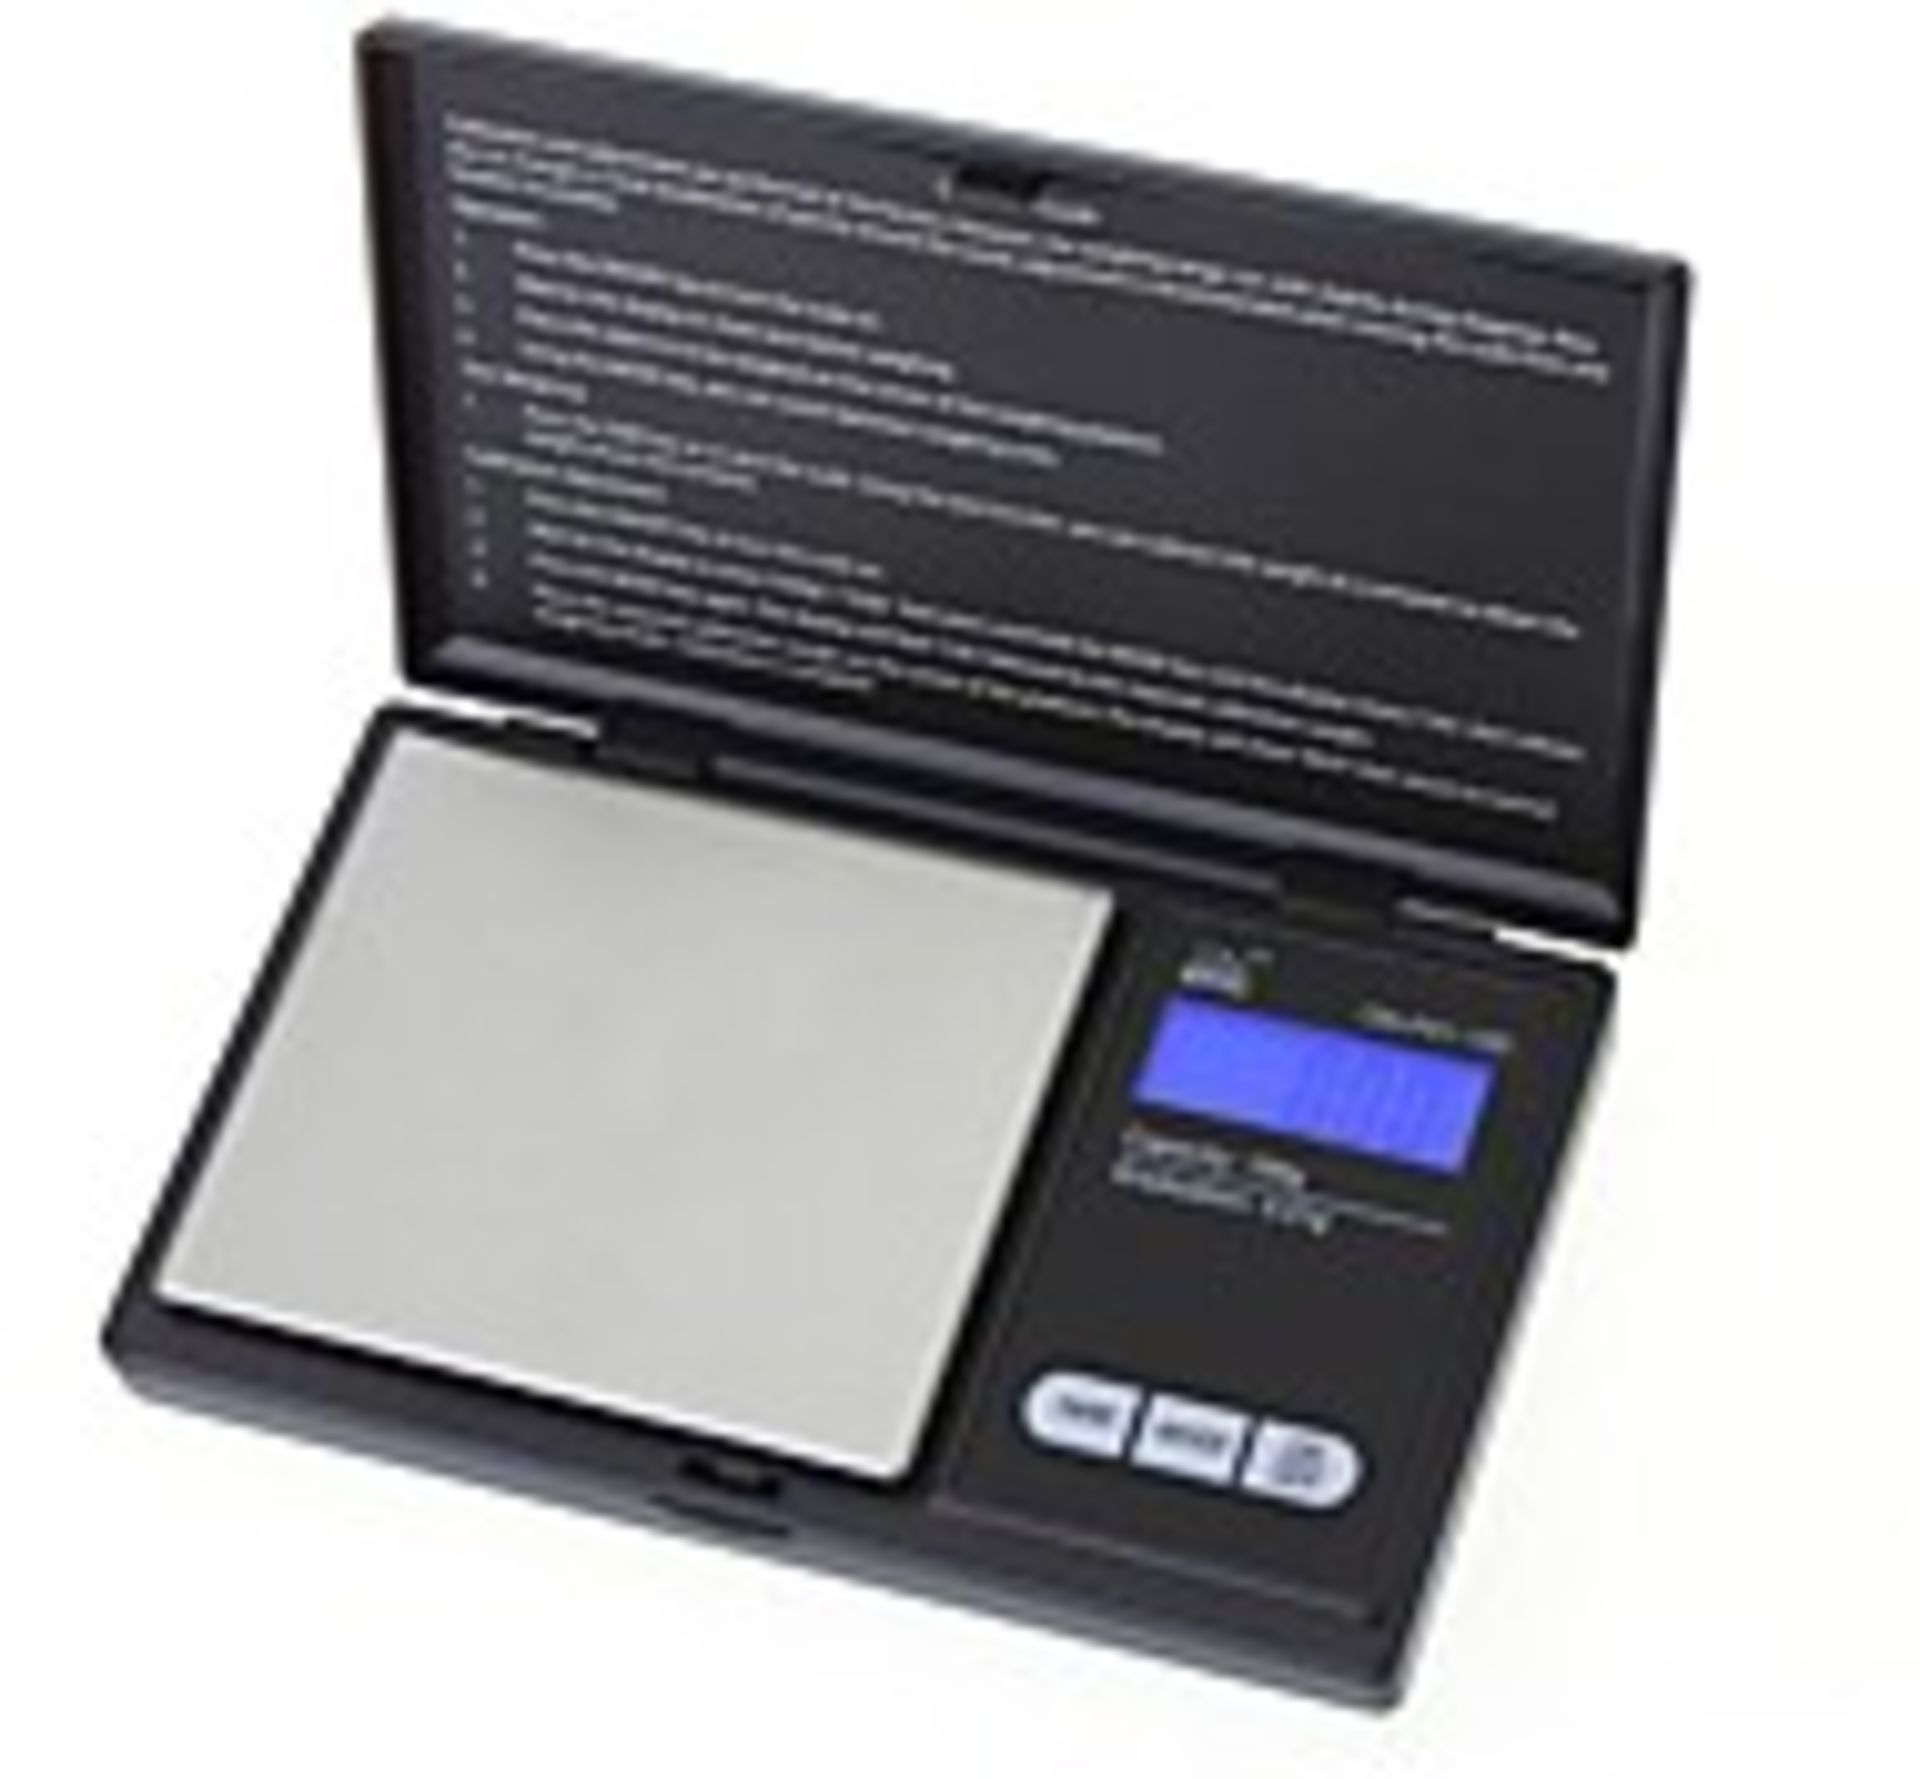 V *TRADE QTY* Brand New Professional Digital Mini Scales (500 gram x 0.1 gram) X 4 YOUR BID PRICE TO